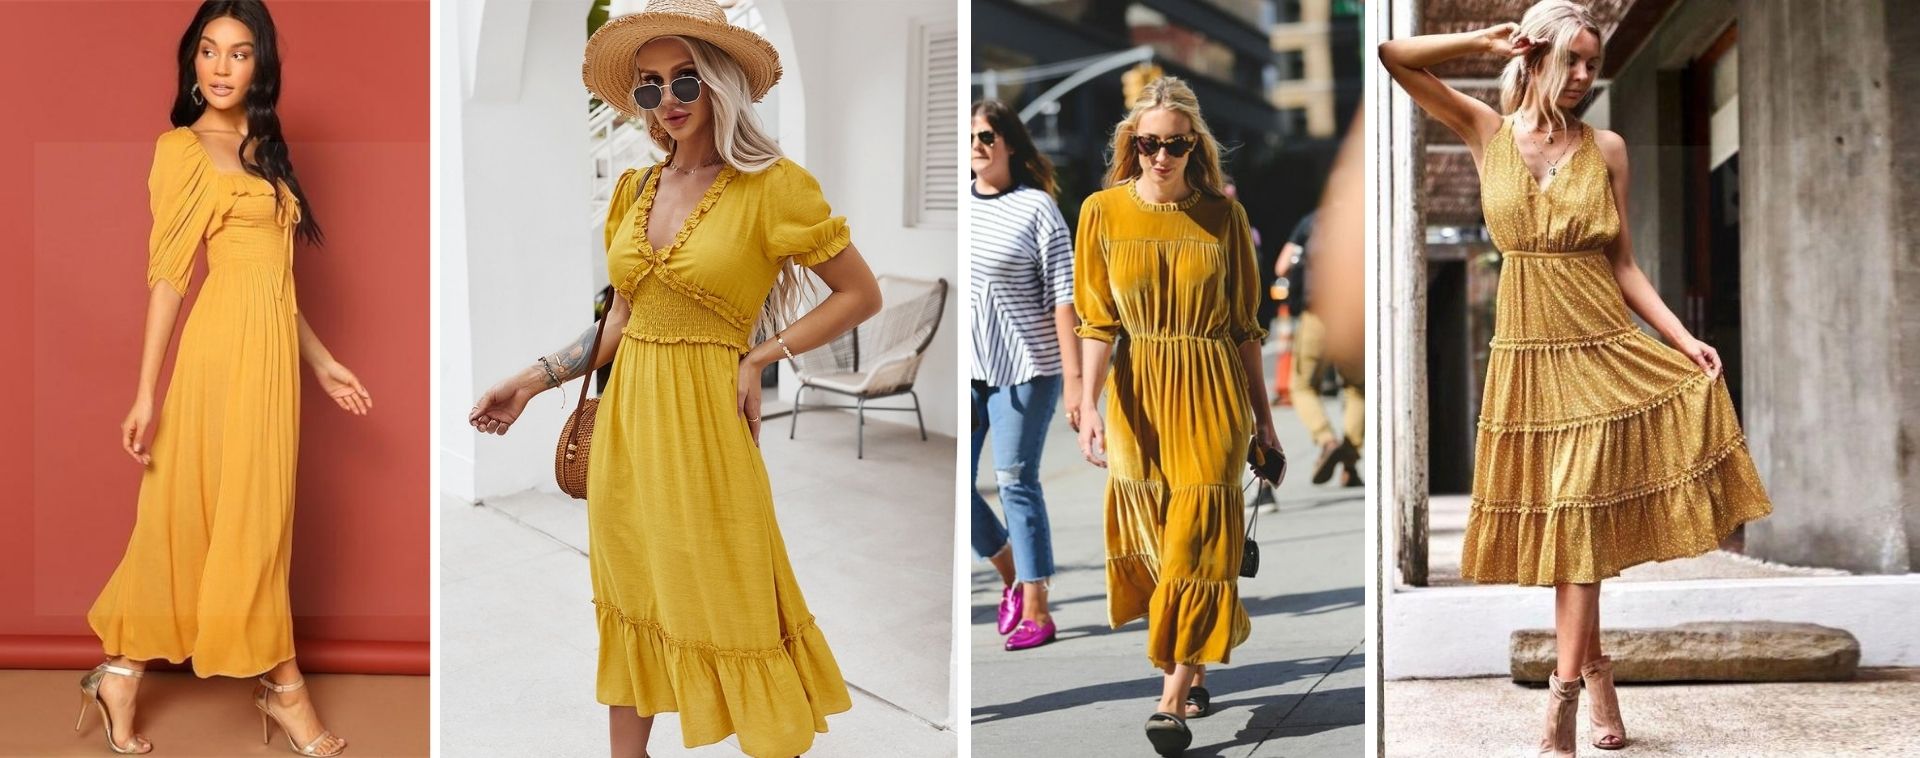 mustard yellow summer bohemian dress